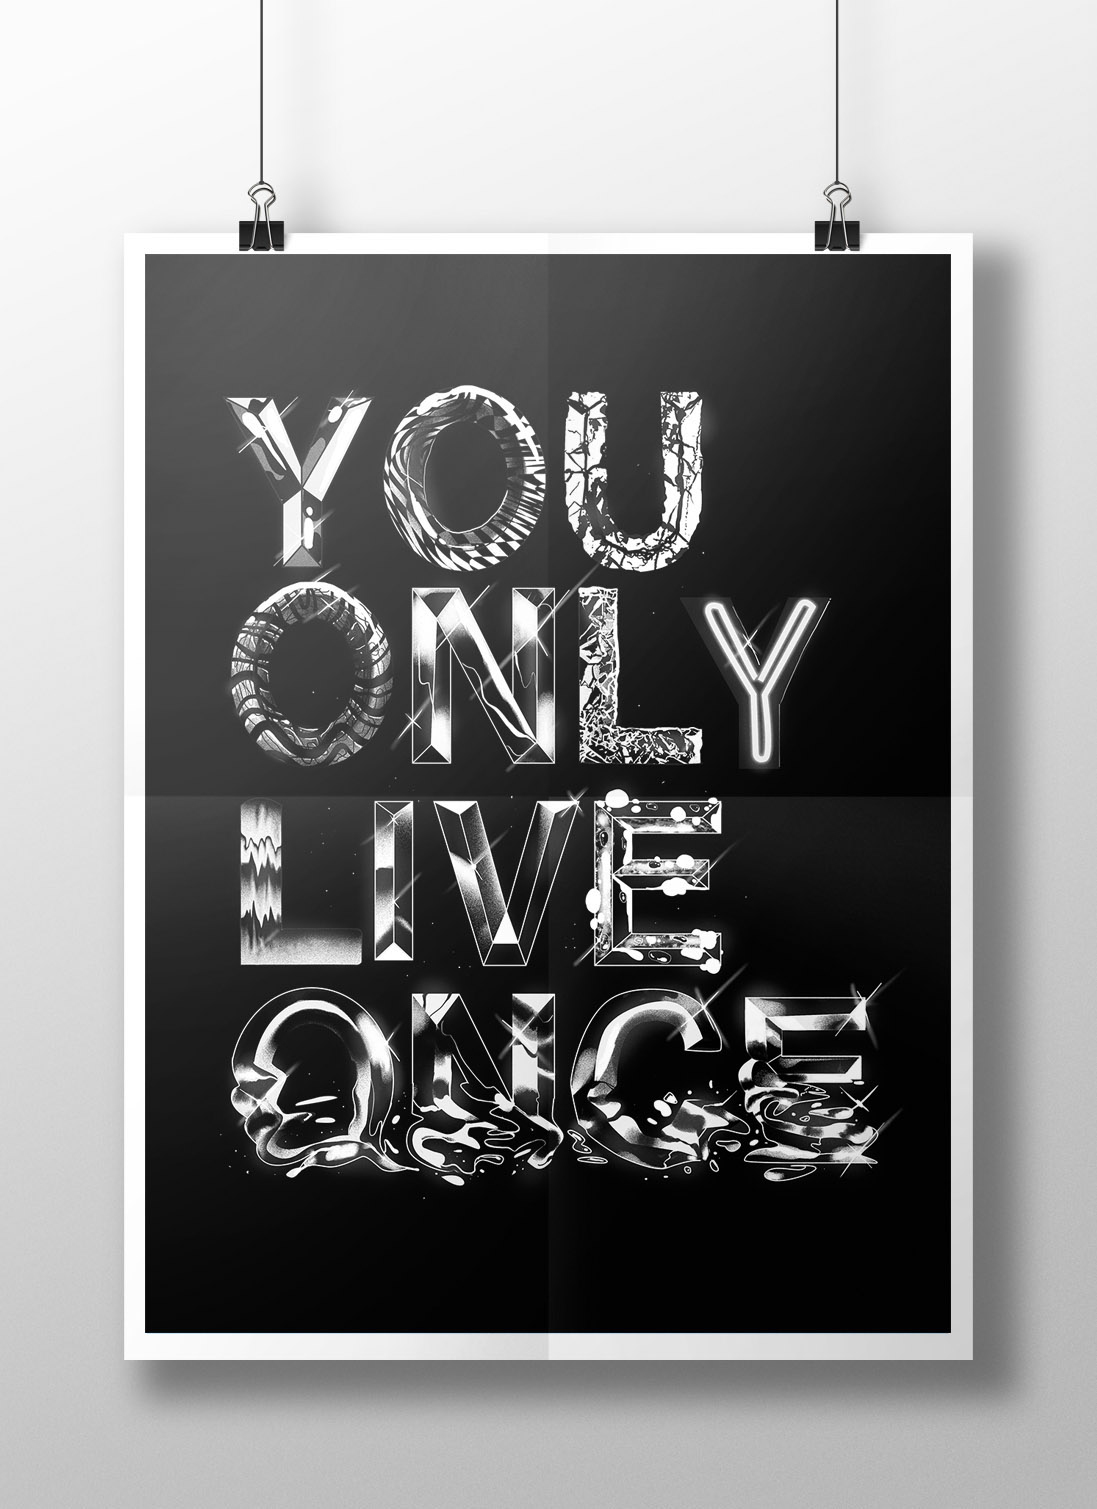 type letters lettering black White chrome poster design art minimal textures Treatment